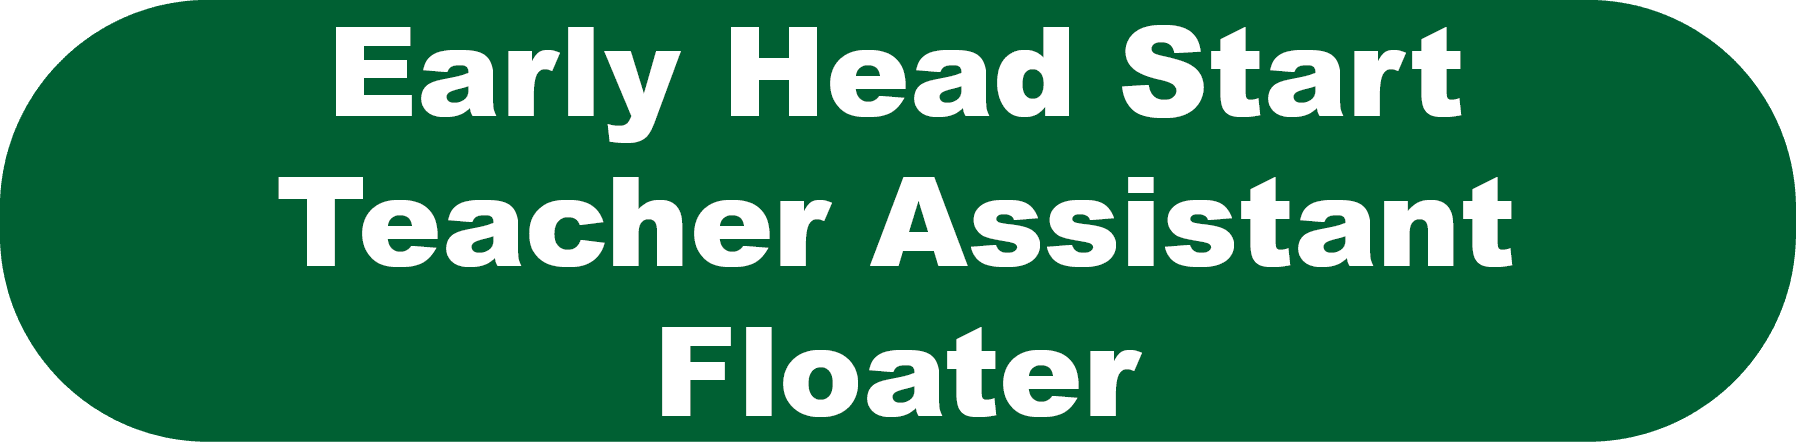 Early Head Start Teacher Assistant Floater